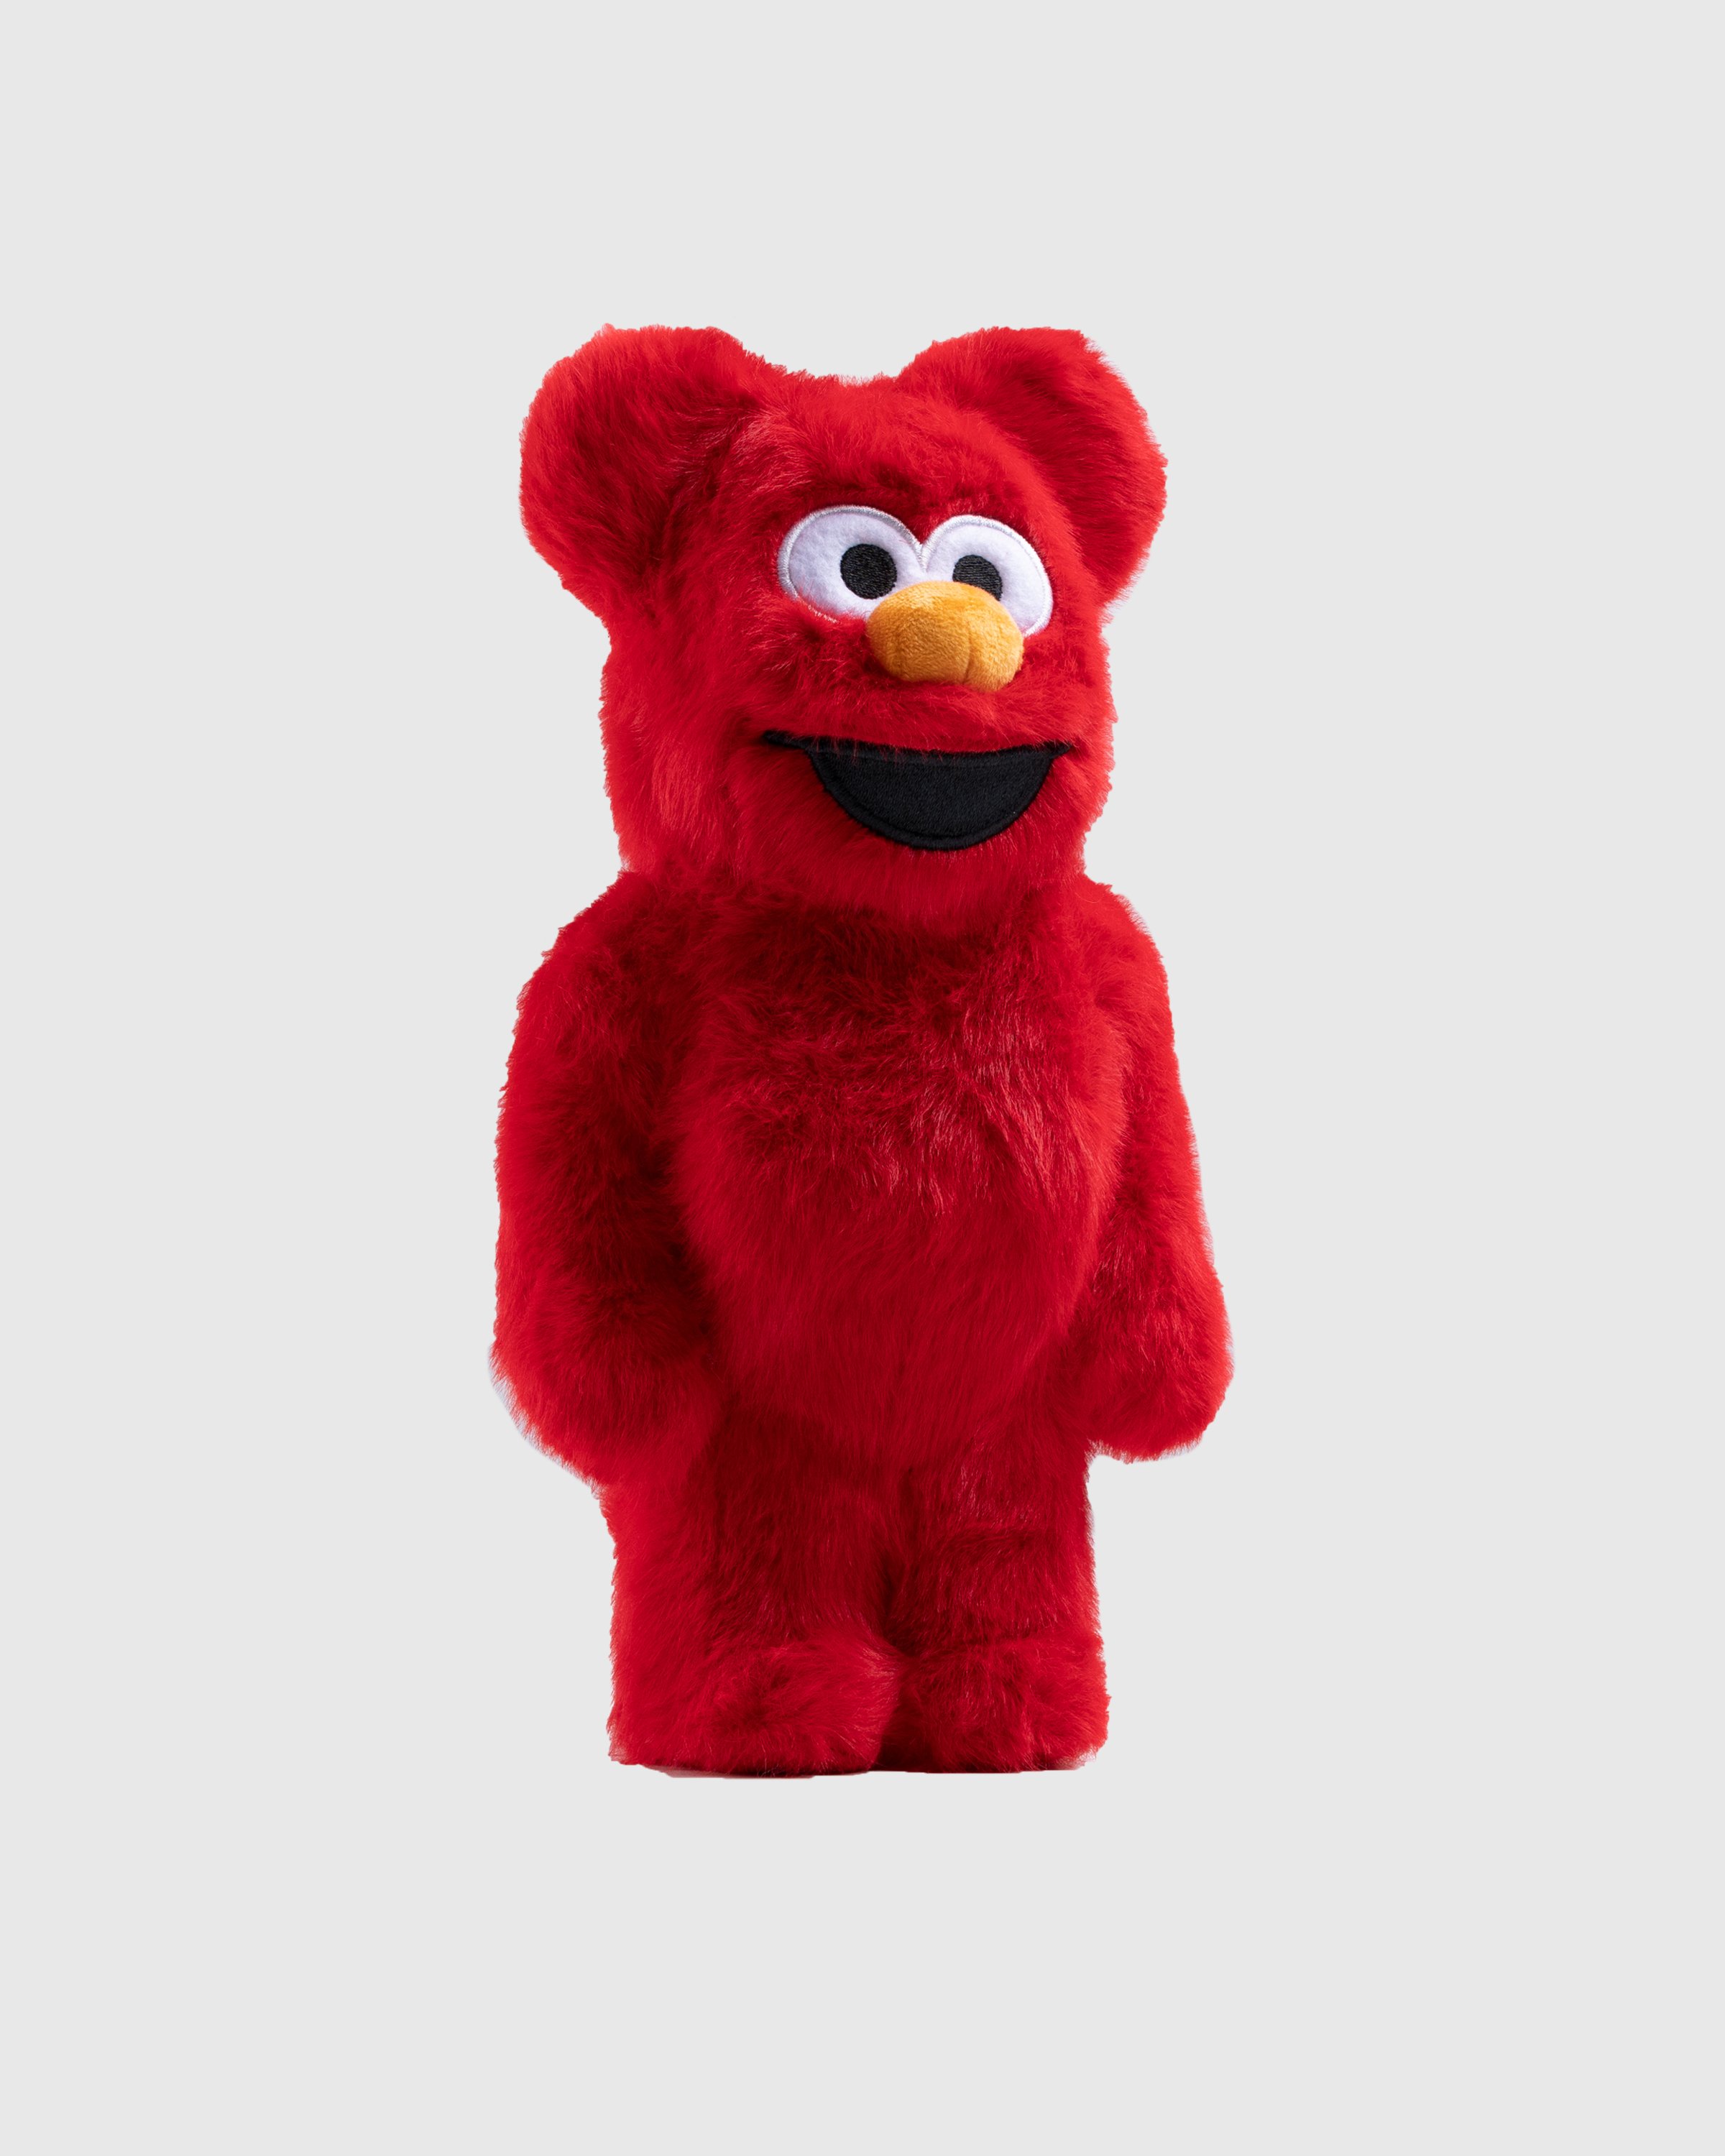 Medicom - Be@rbrick Elmo Costume Version 2 1000％ Red - Lifestyle - Red - Image 2